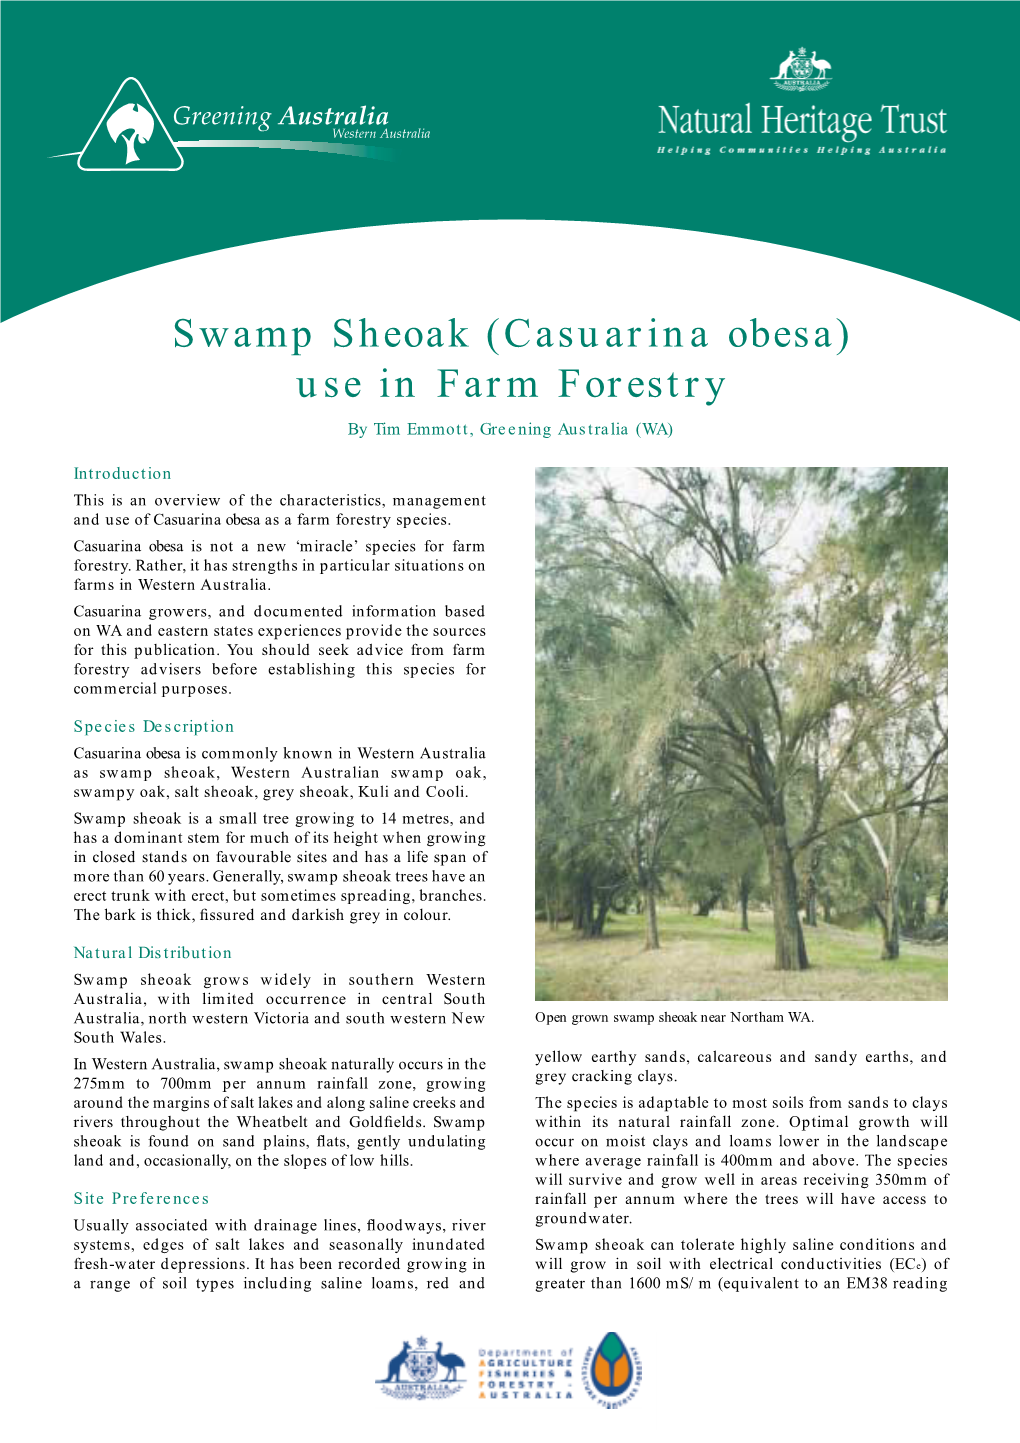 Swamp Sheoak (Casuarina Obesa) Use in Farm Forestry by Tim Emmott, Greening Australia (WA)